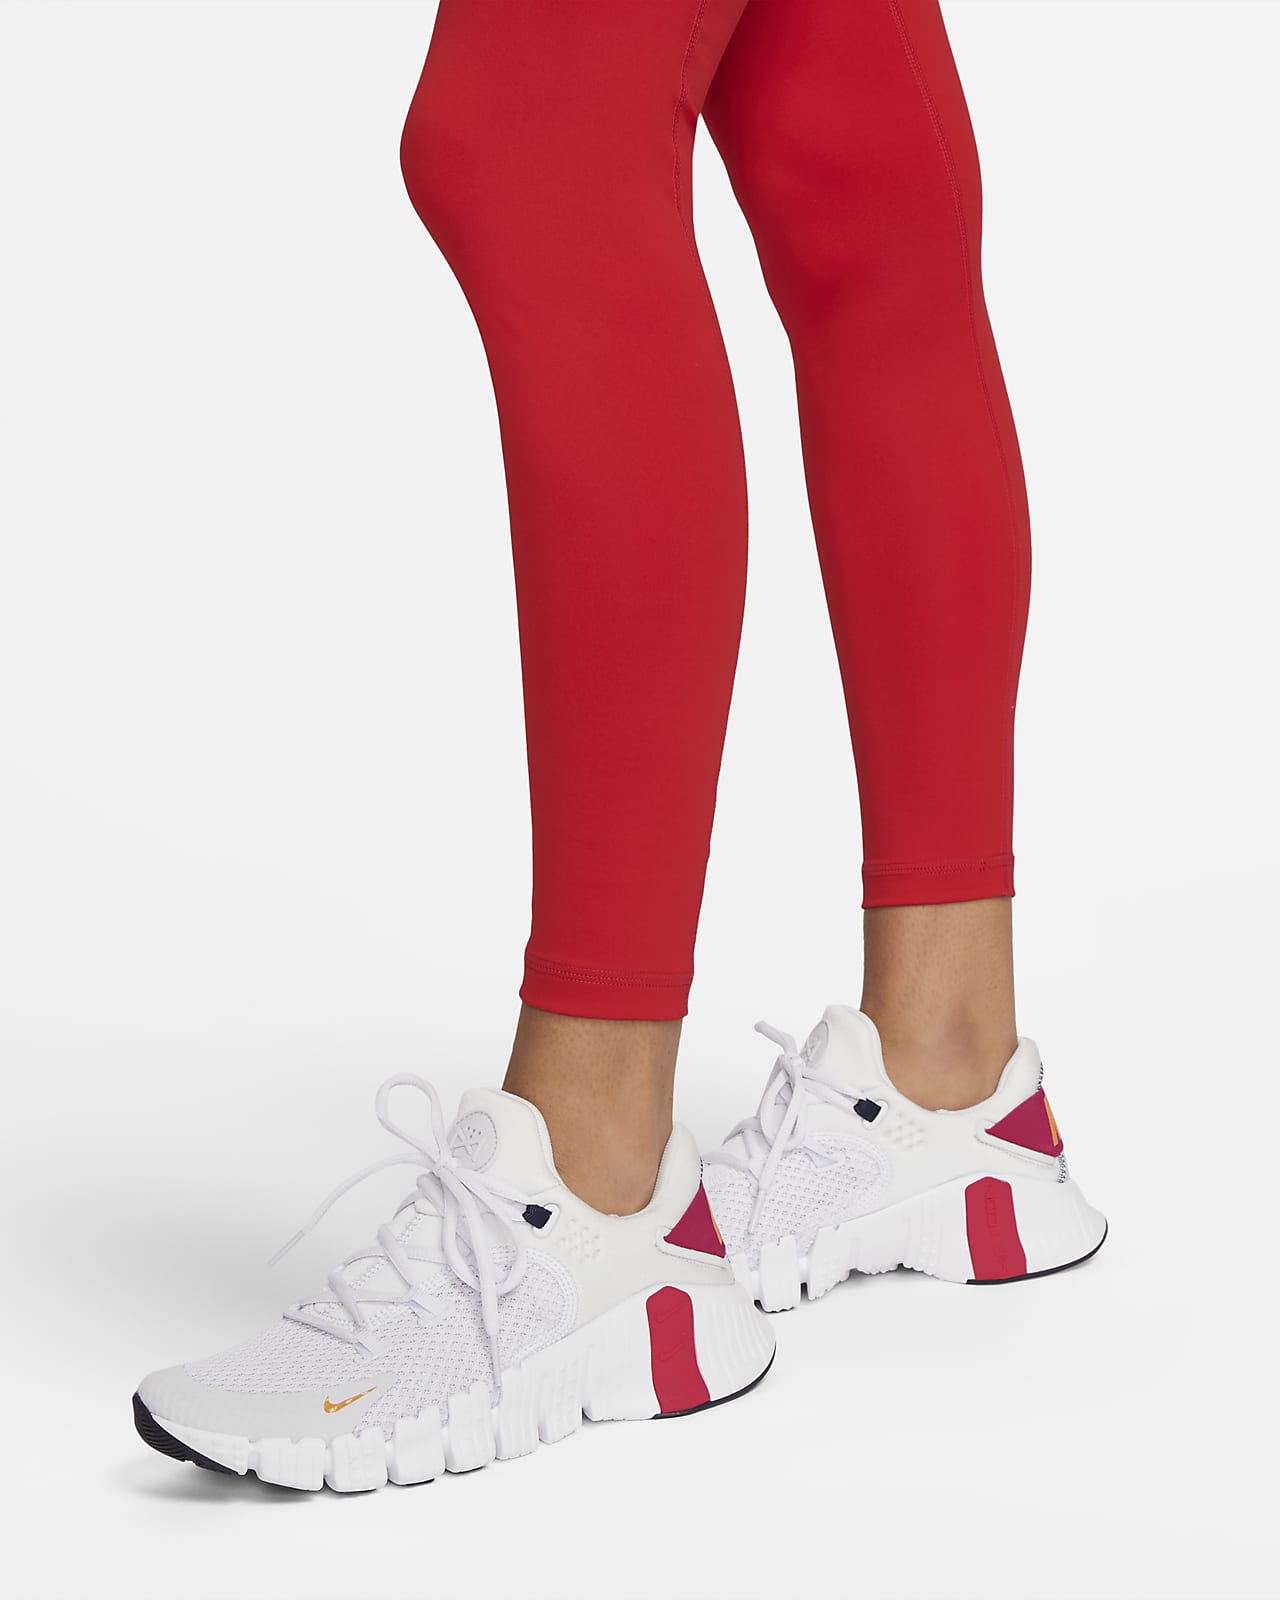 Air Jordan Women's Green Leggings - Puffer Reds